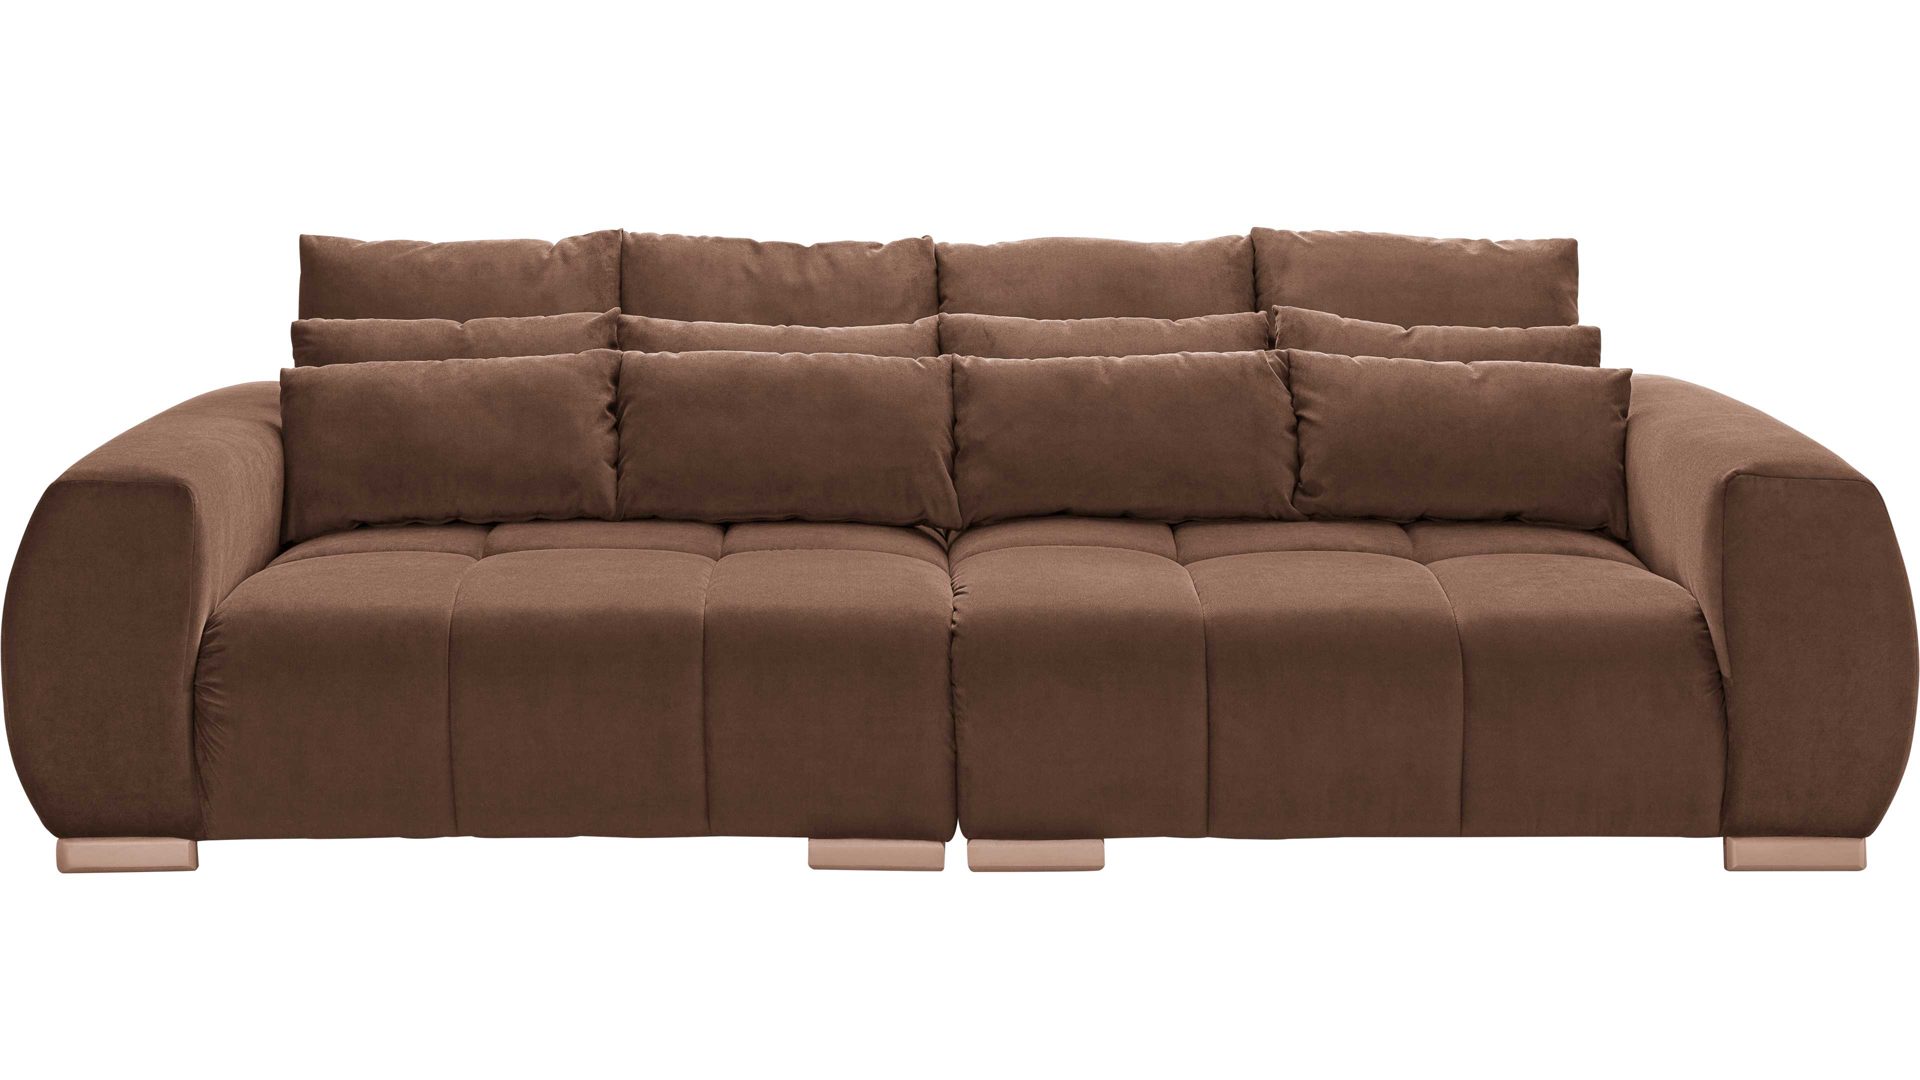 Bigsofa KAWOO aus Stoff in Braun KAWOO Bigsofa Serie Escape bzw. Couch brauner Bezug Sun 29 & Holzfüße - Länge ca. 276 cm